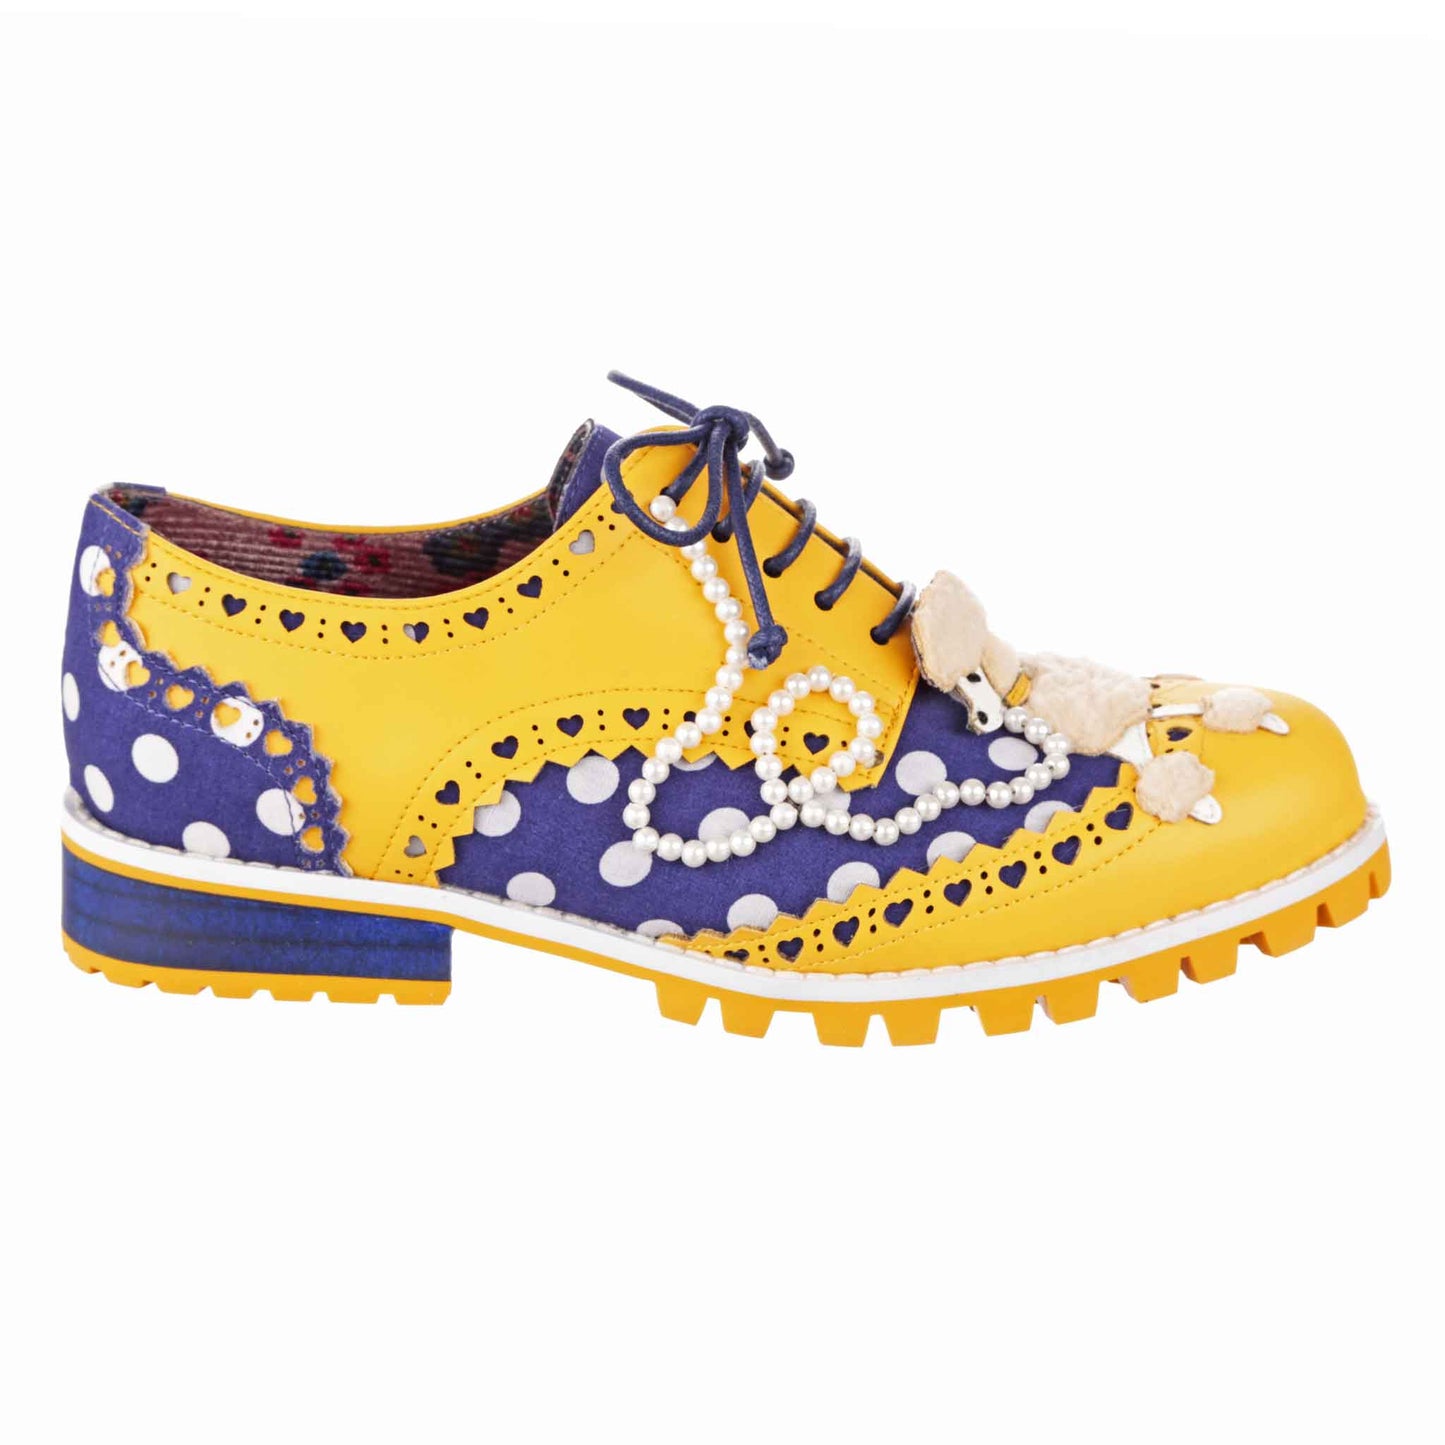 Irregular Choice Women's 4614-01 Sockhop Sweetie Lace Up Brogue Shoes Mustard